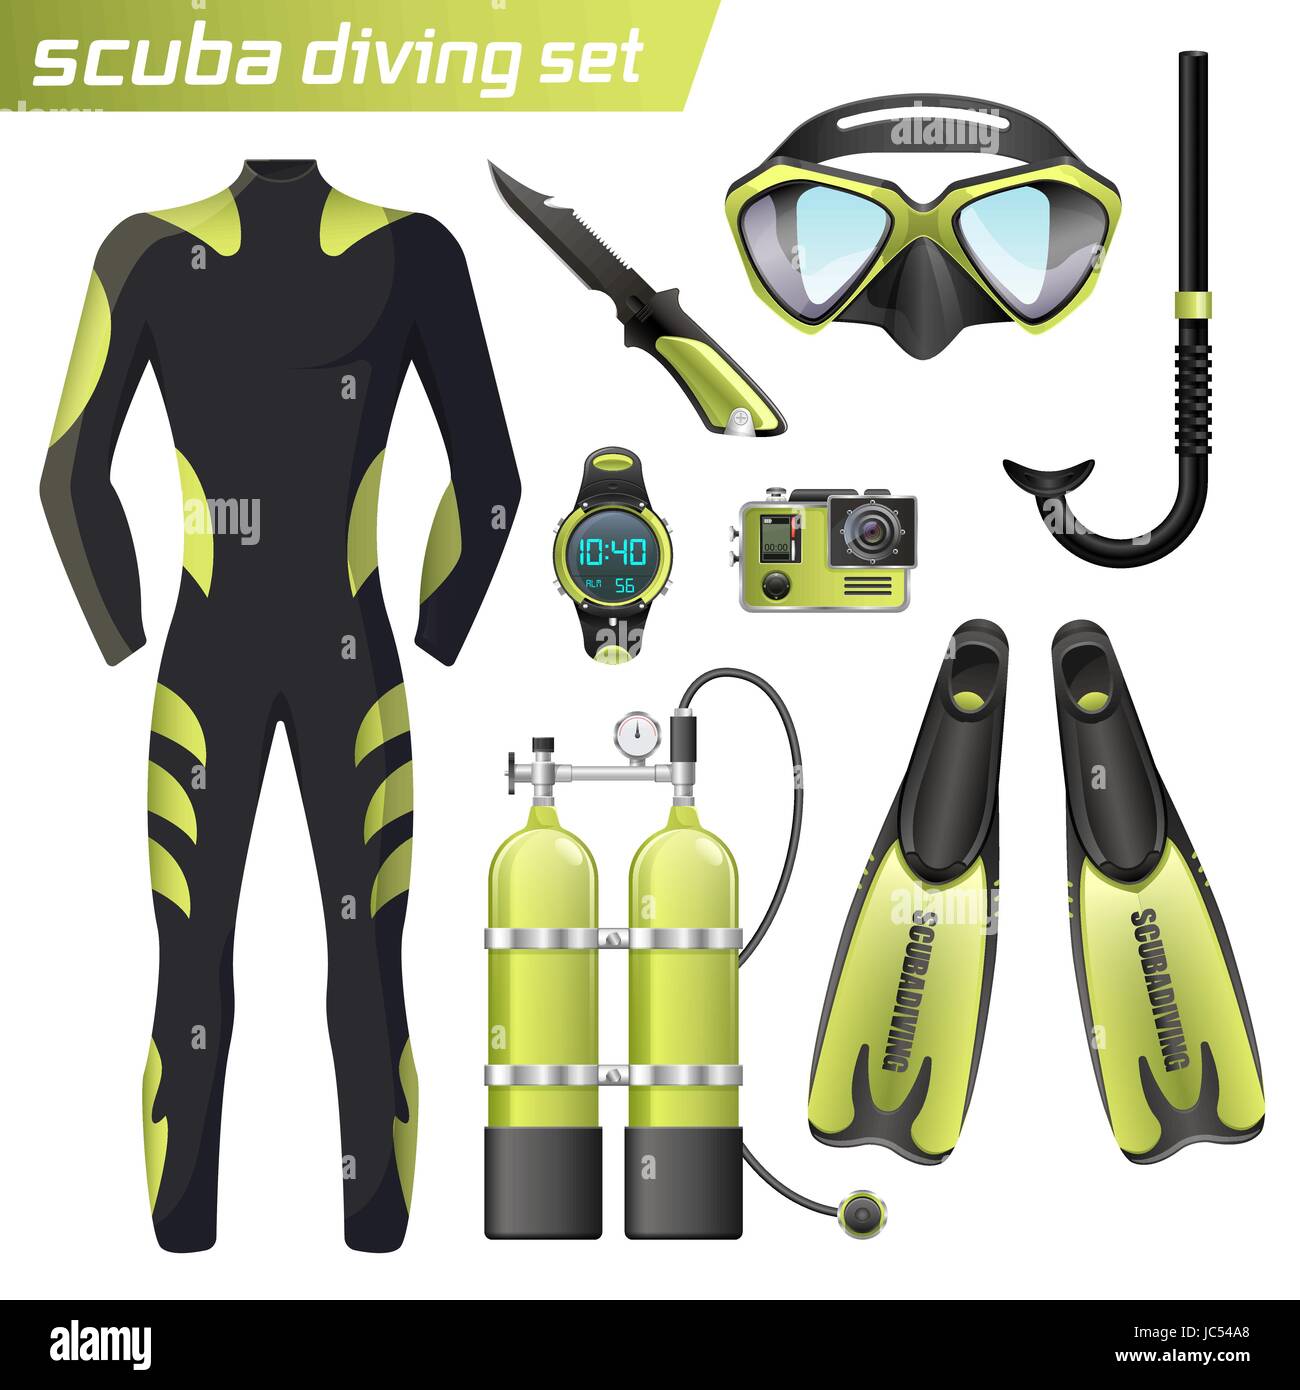 Scuba diving equipment Stock Vector Images - Alamy